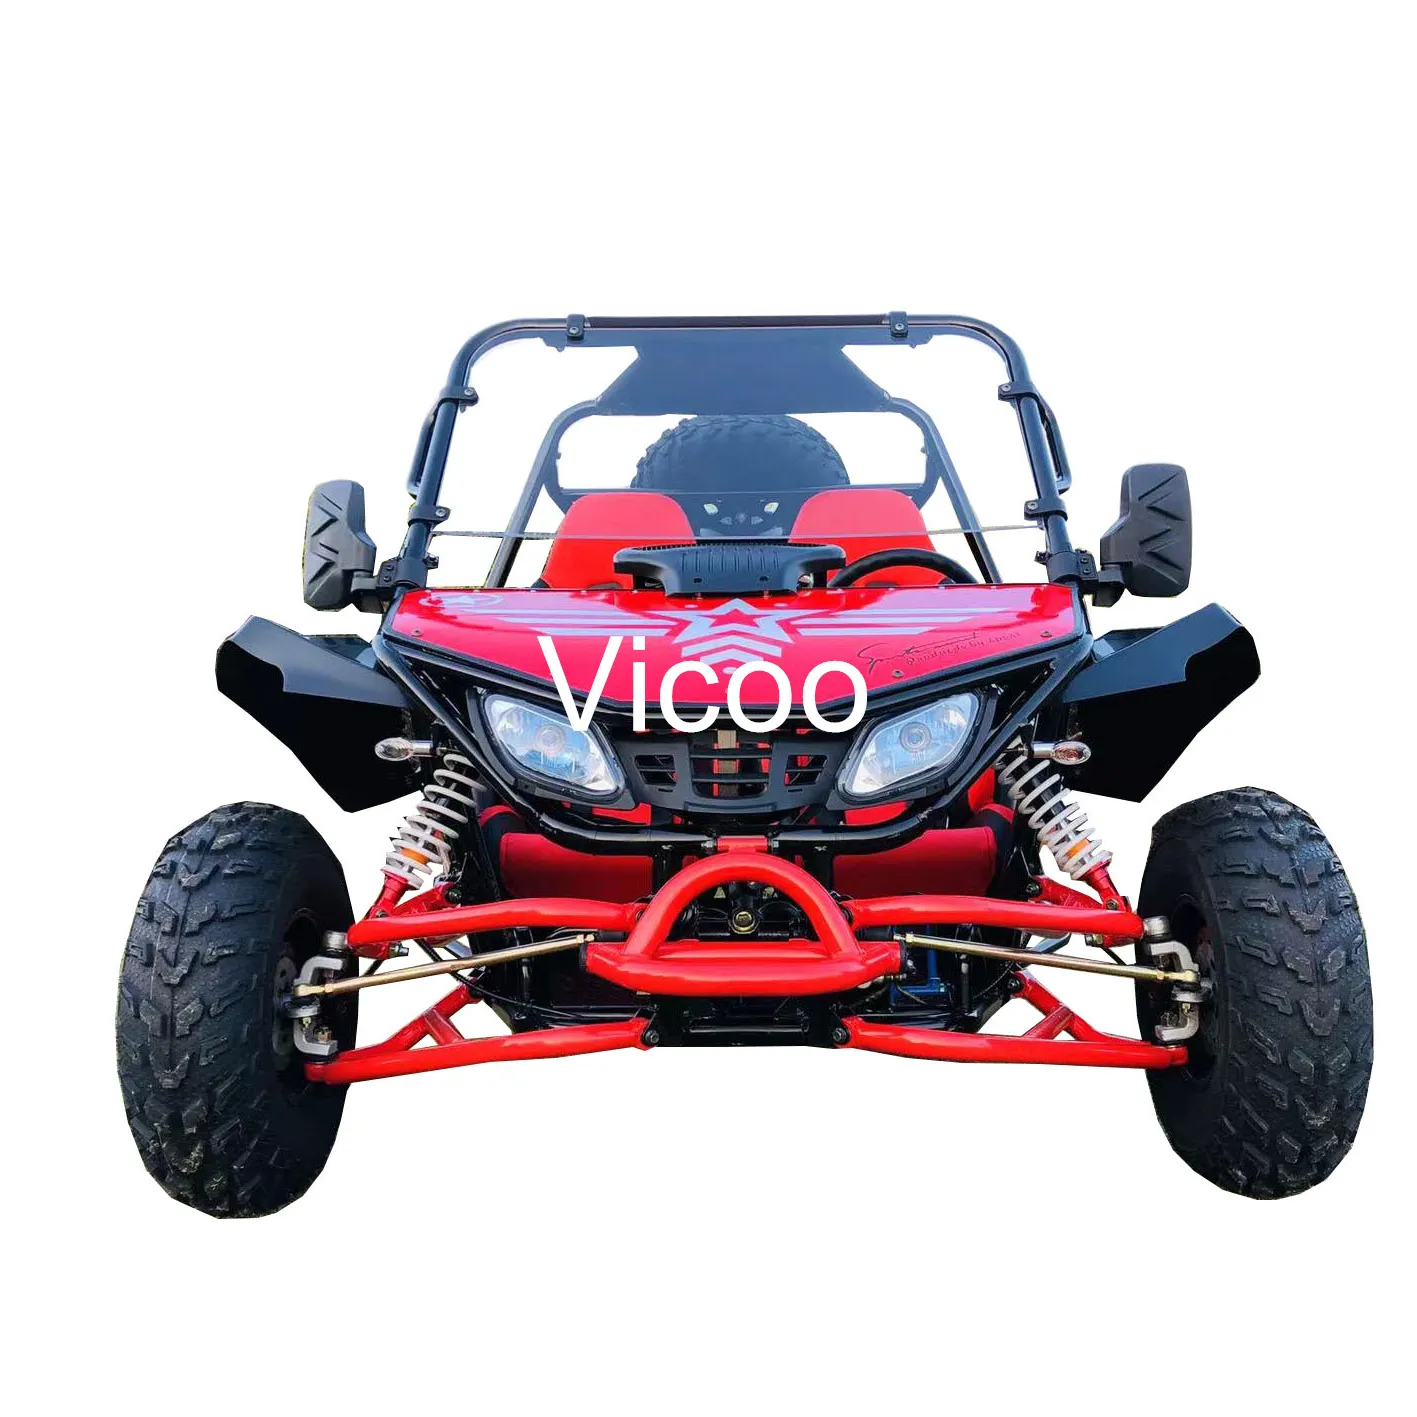 Vicoo 200cc โกคาร์ทอัตโนมัติสำหรับผู้ใหญ่ที่แข่งรถออฟโรดโกคาร์ท